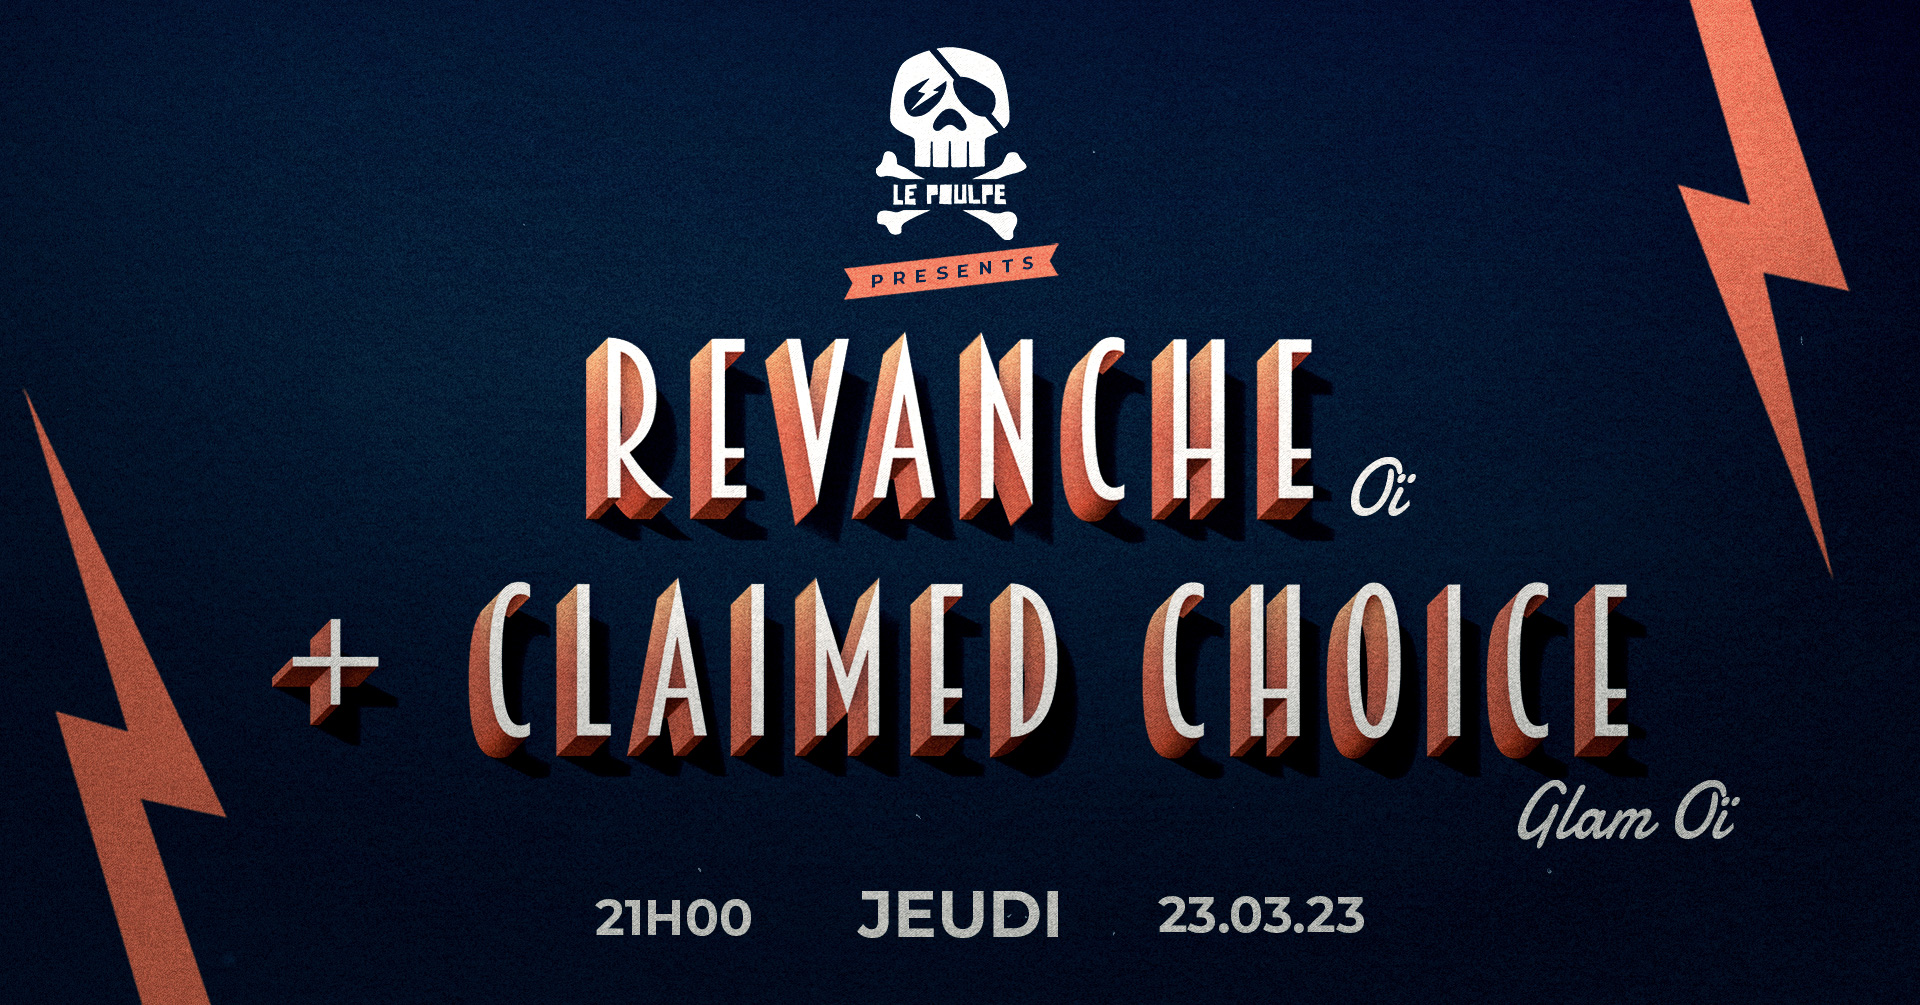 REVANCHE (Oï) + CLAIMED CHOICE (Glam Oï) @ Le Poulpe